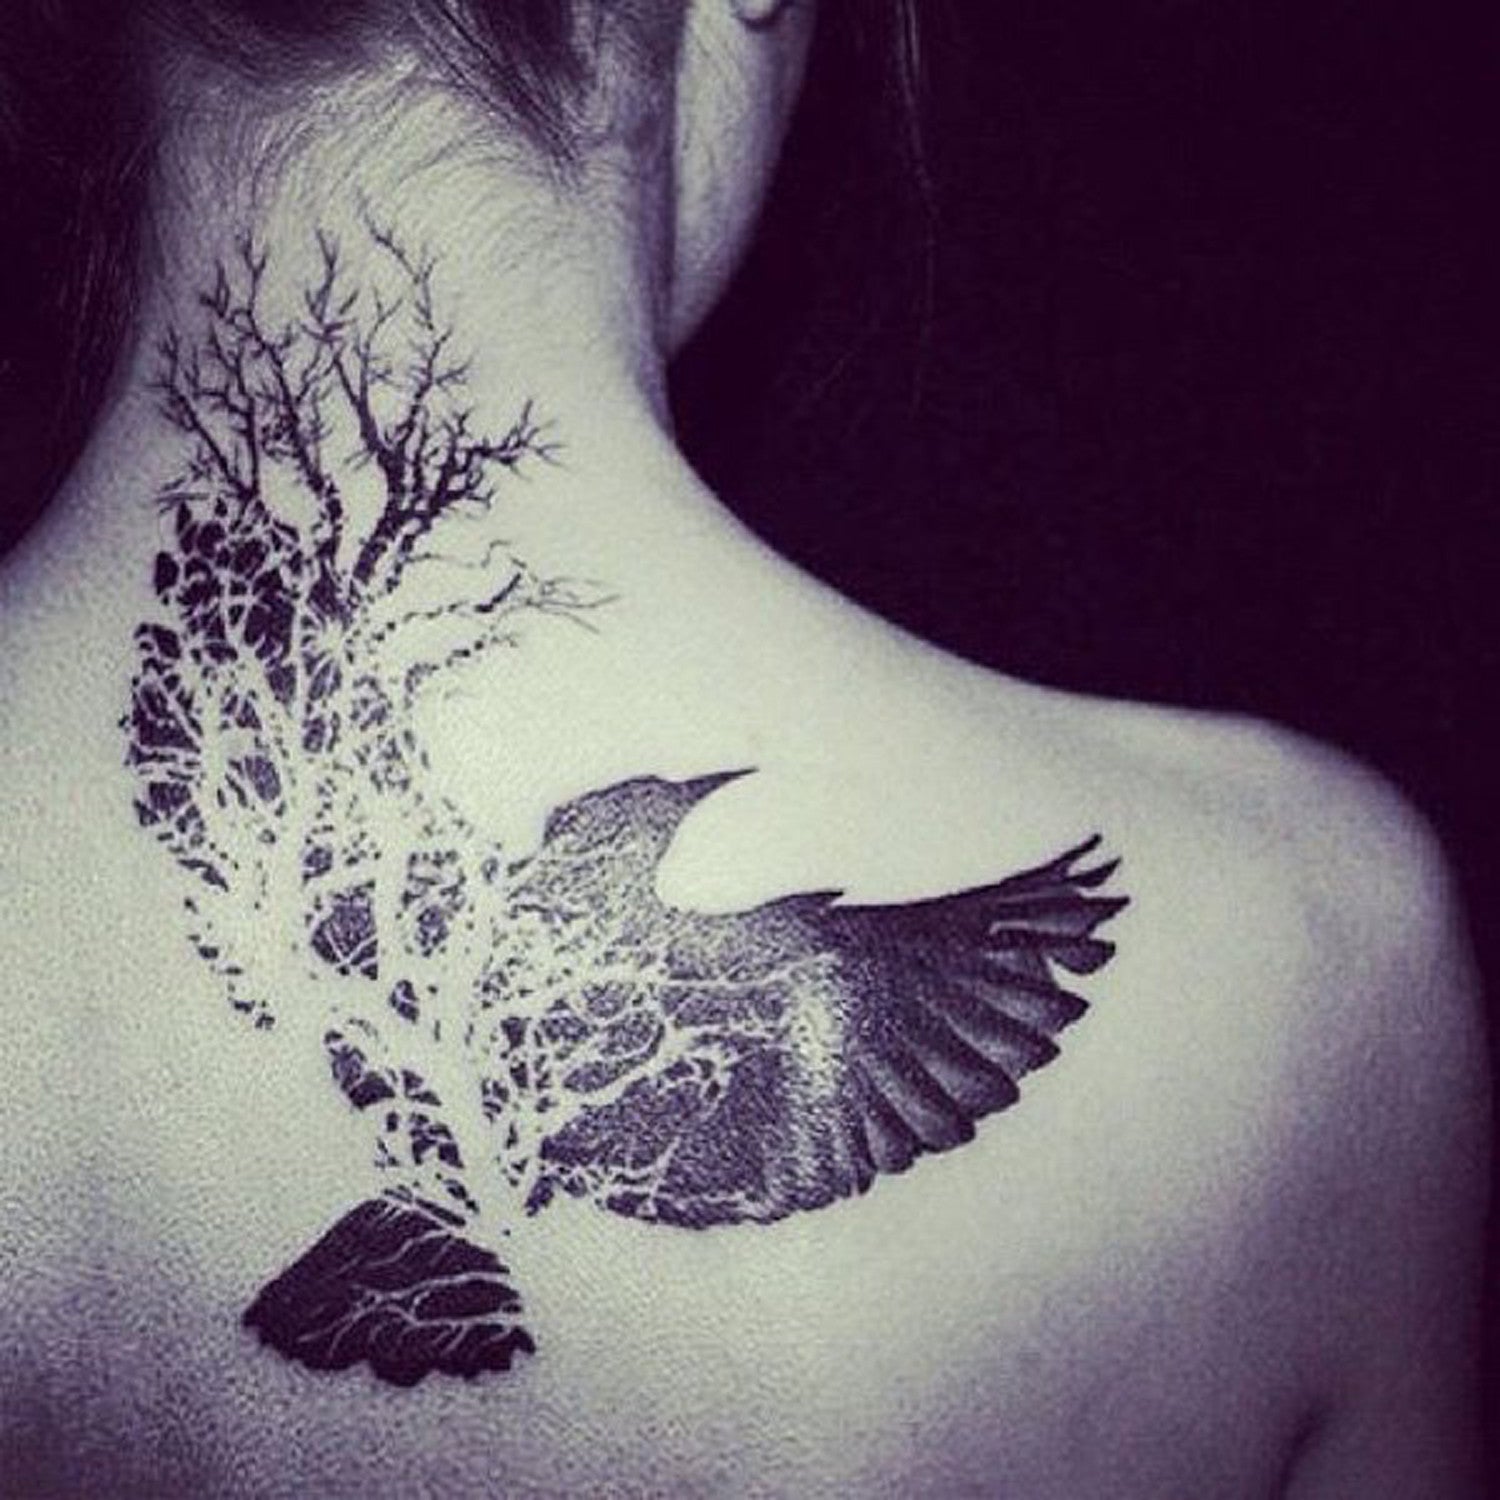 tree tattoos back of neck